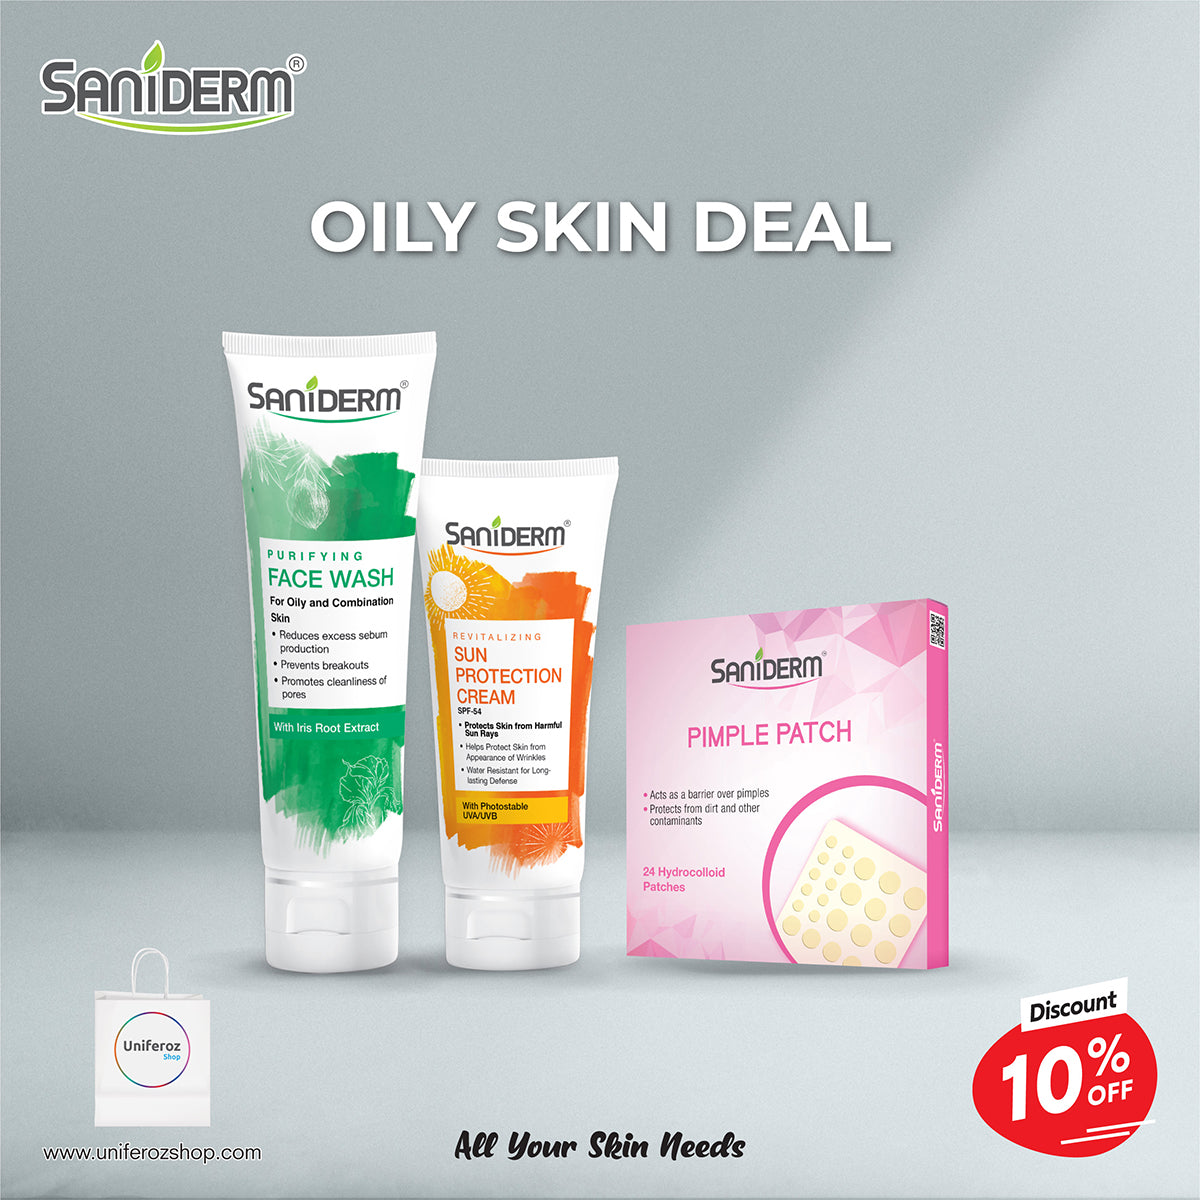 Saniderm Oily Skin Deal (Free Saniderm Pimple Patch)